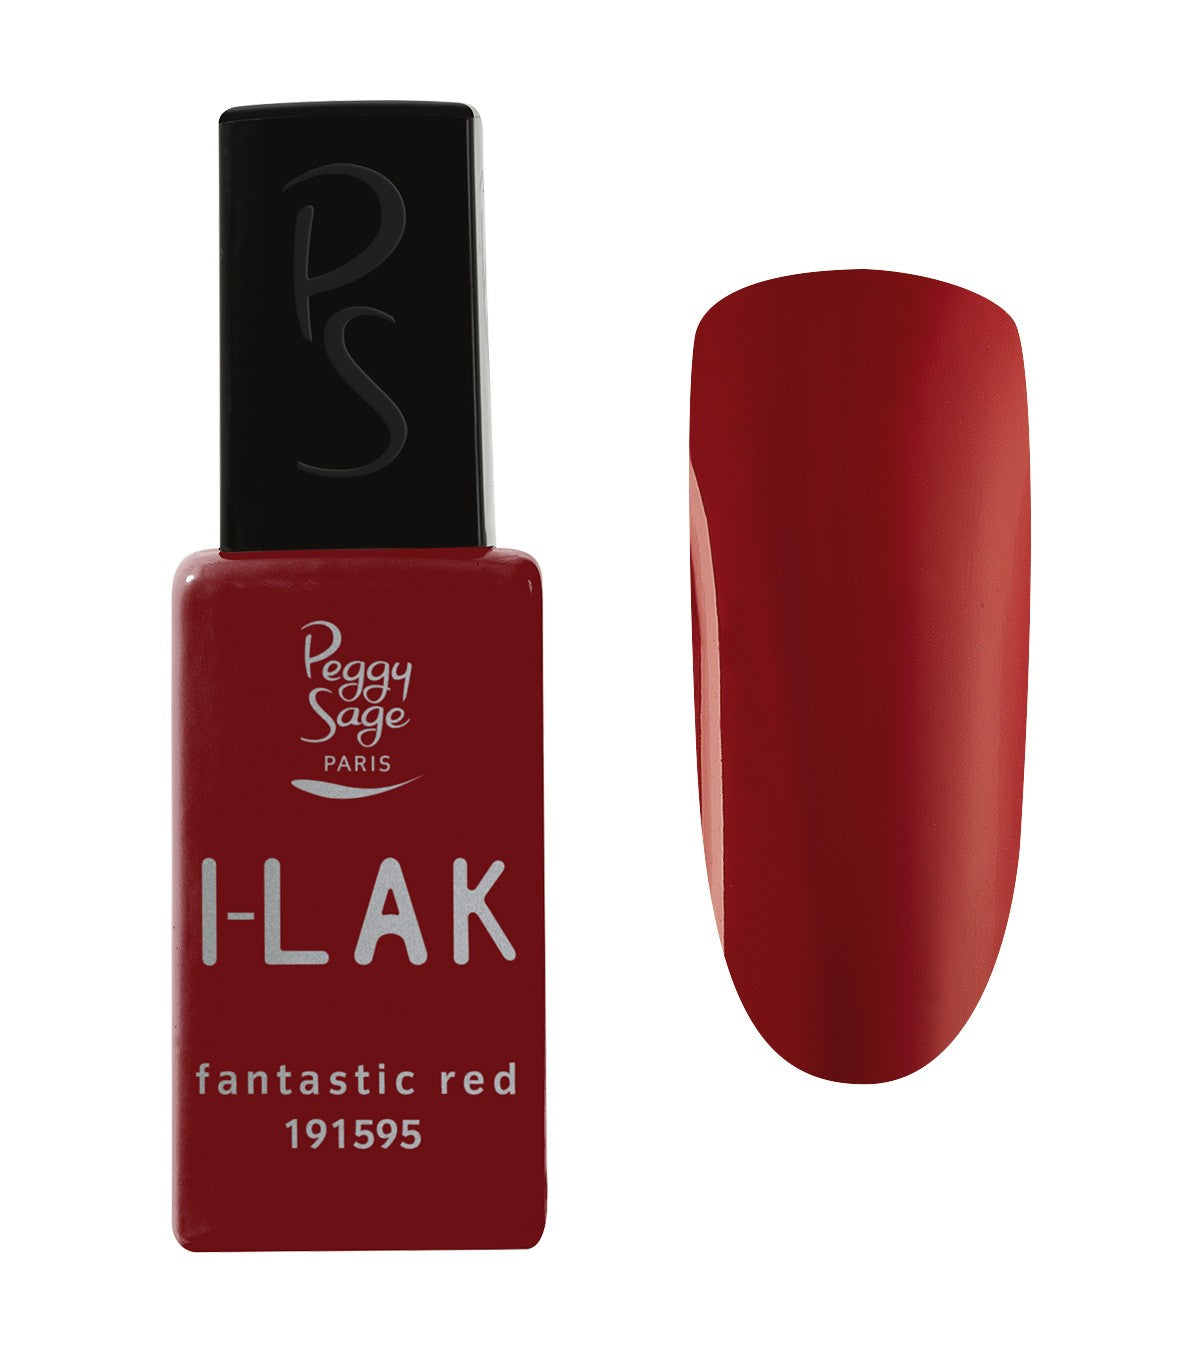 I-LAK Fantastic Red Ref 191595